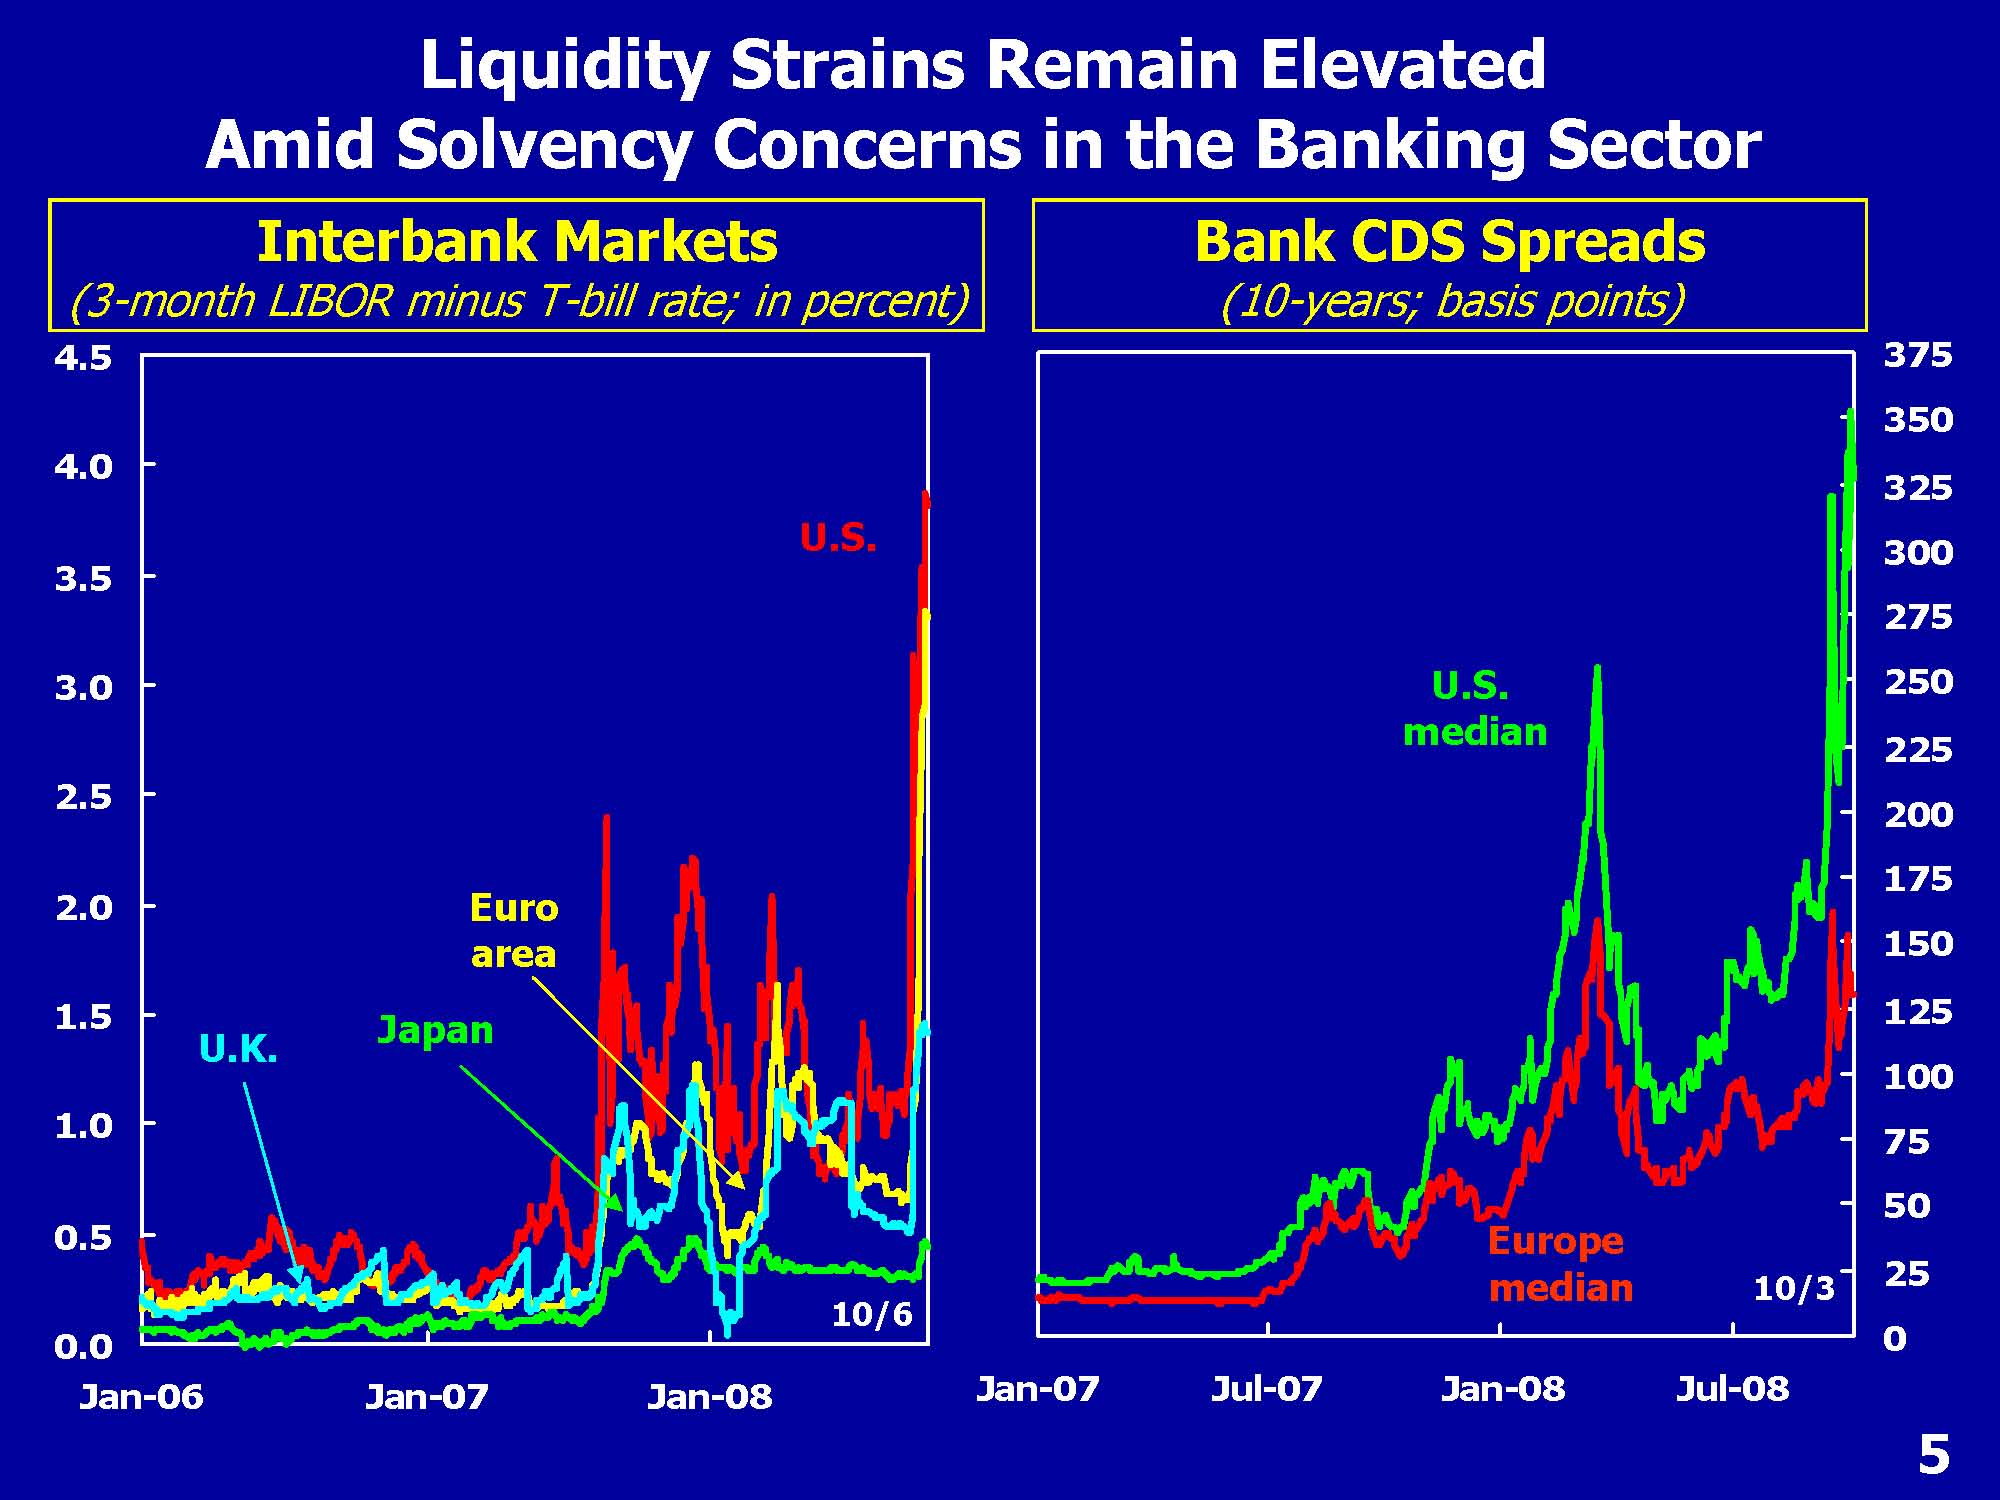 Liquidity strains remain elevated